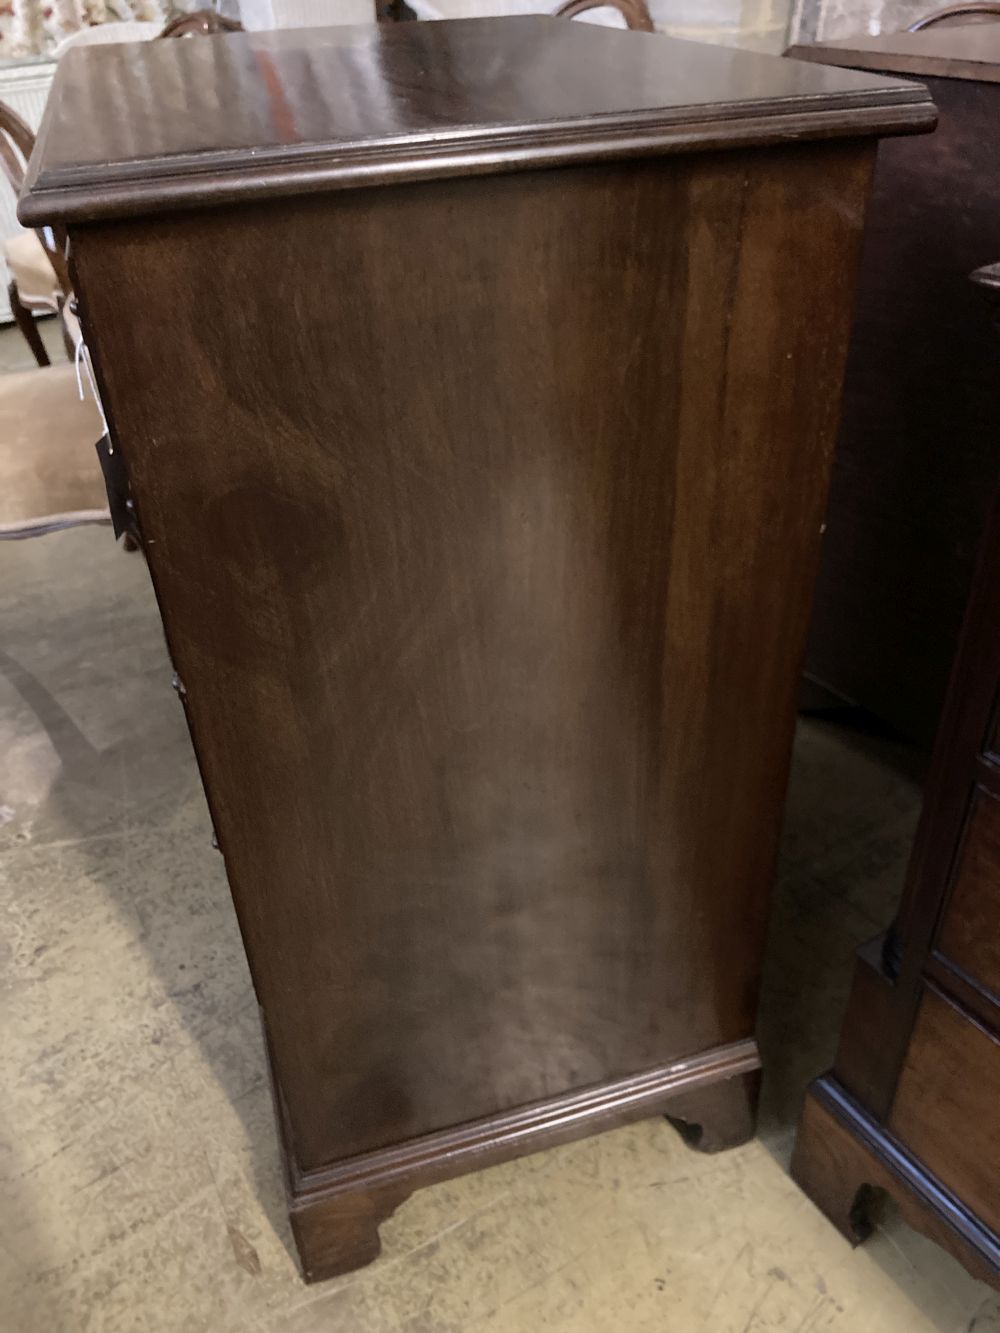 A small Edwardian George III style mahogany chest, bears Bartholomew & Fletcher label, width 66cm, depth 46cm, height 92cm